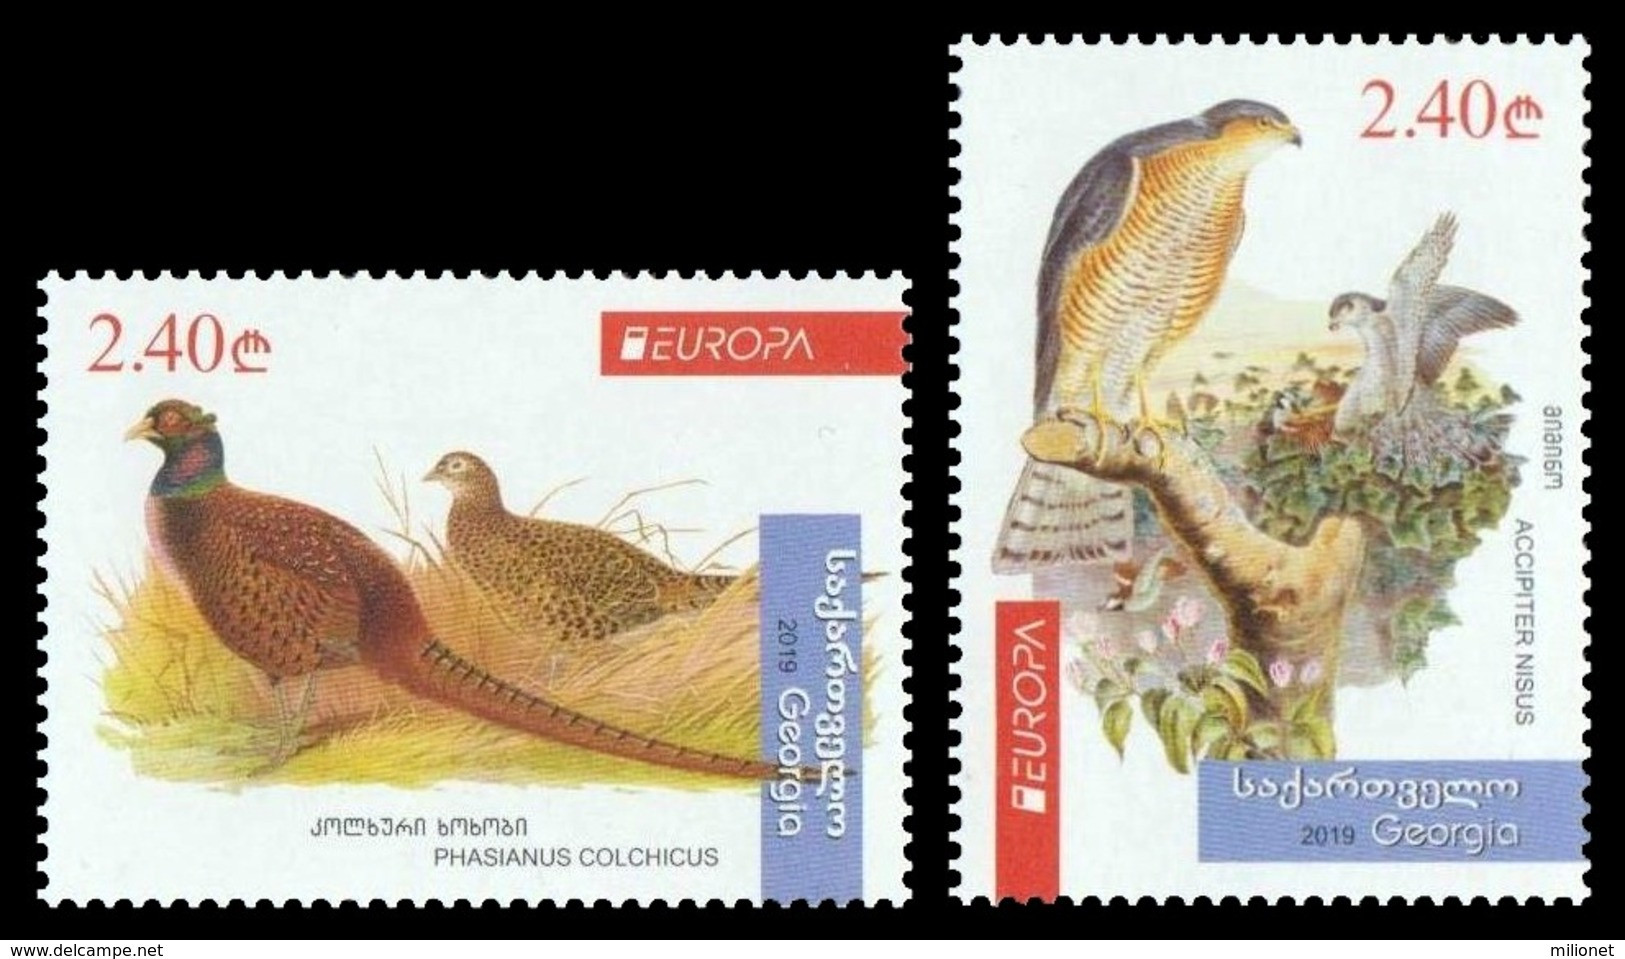 SALE!!! GEORGIA GEORGIE GEORGIEN 2019 EUROPA CEPT NATIONAL BIRDS 2 Stamps MNH ** - 2019